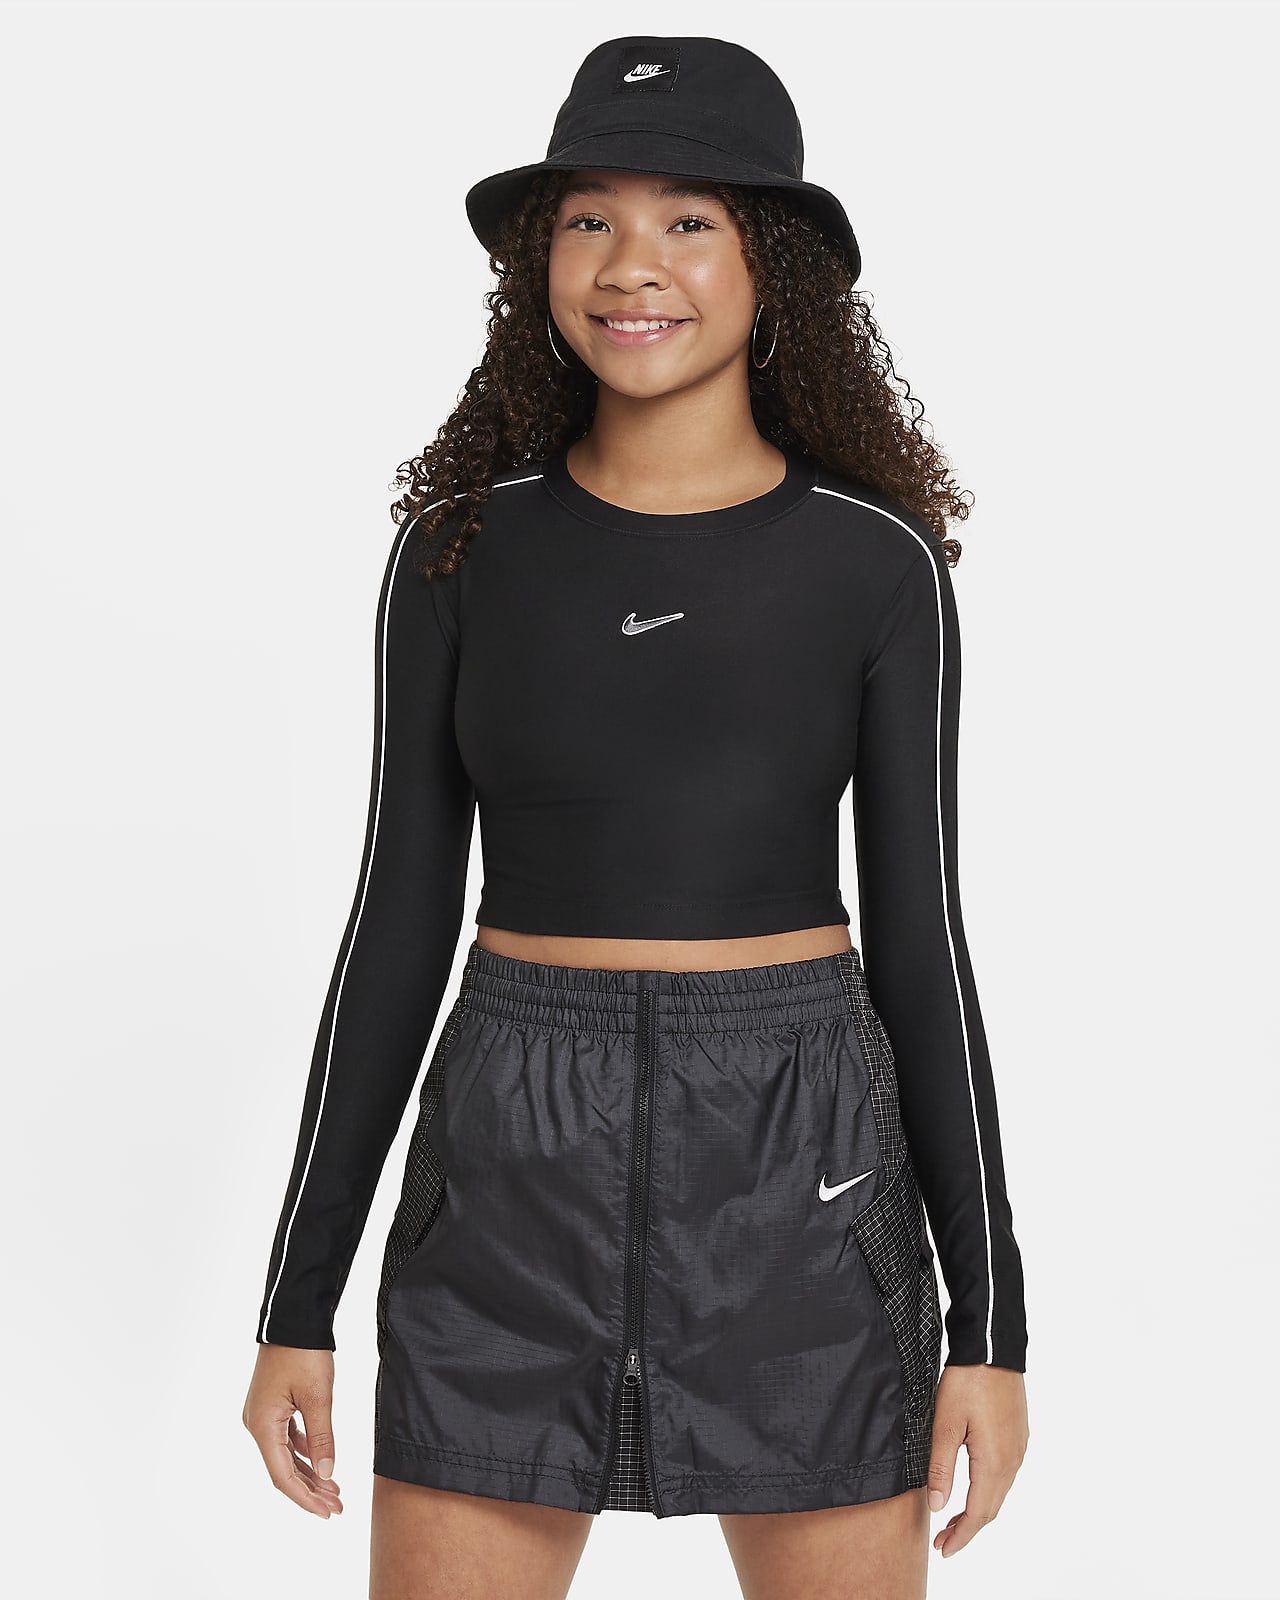 Crop top à manches longues Nike Sportswear pour ado (fille)